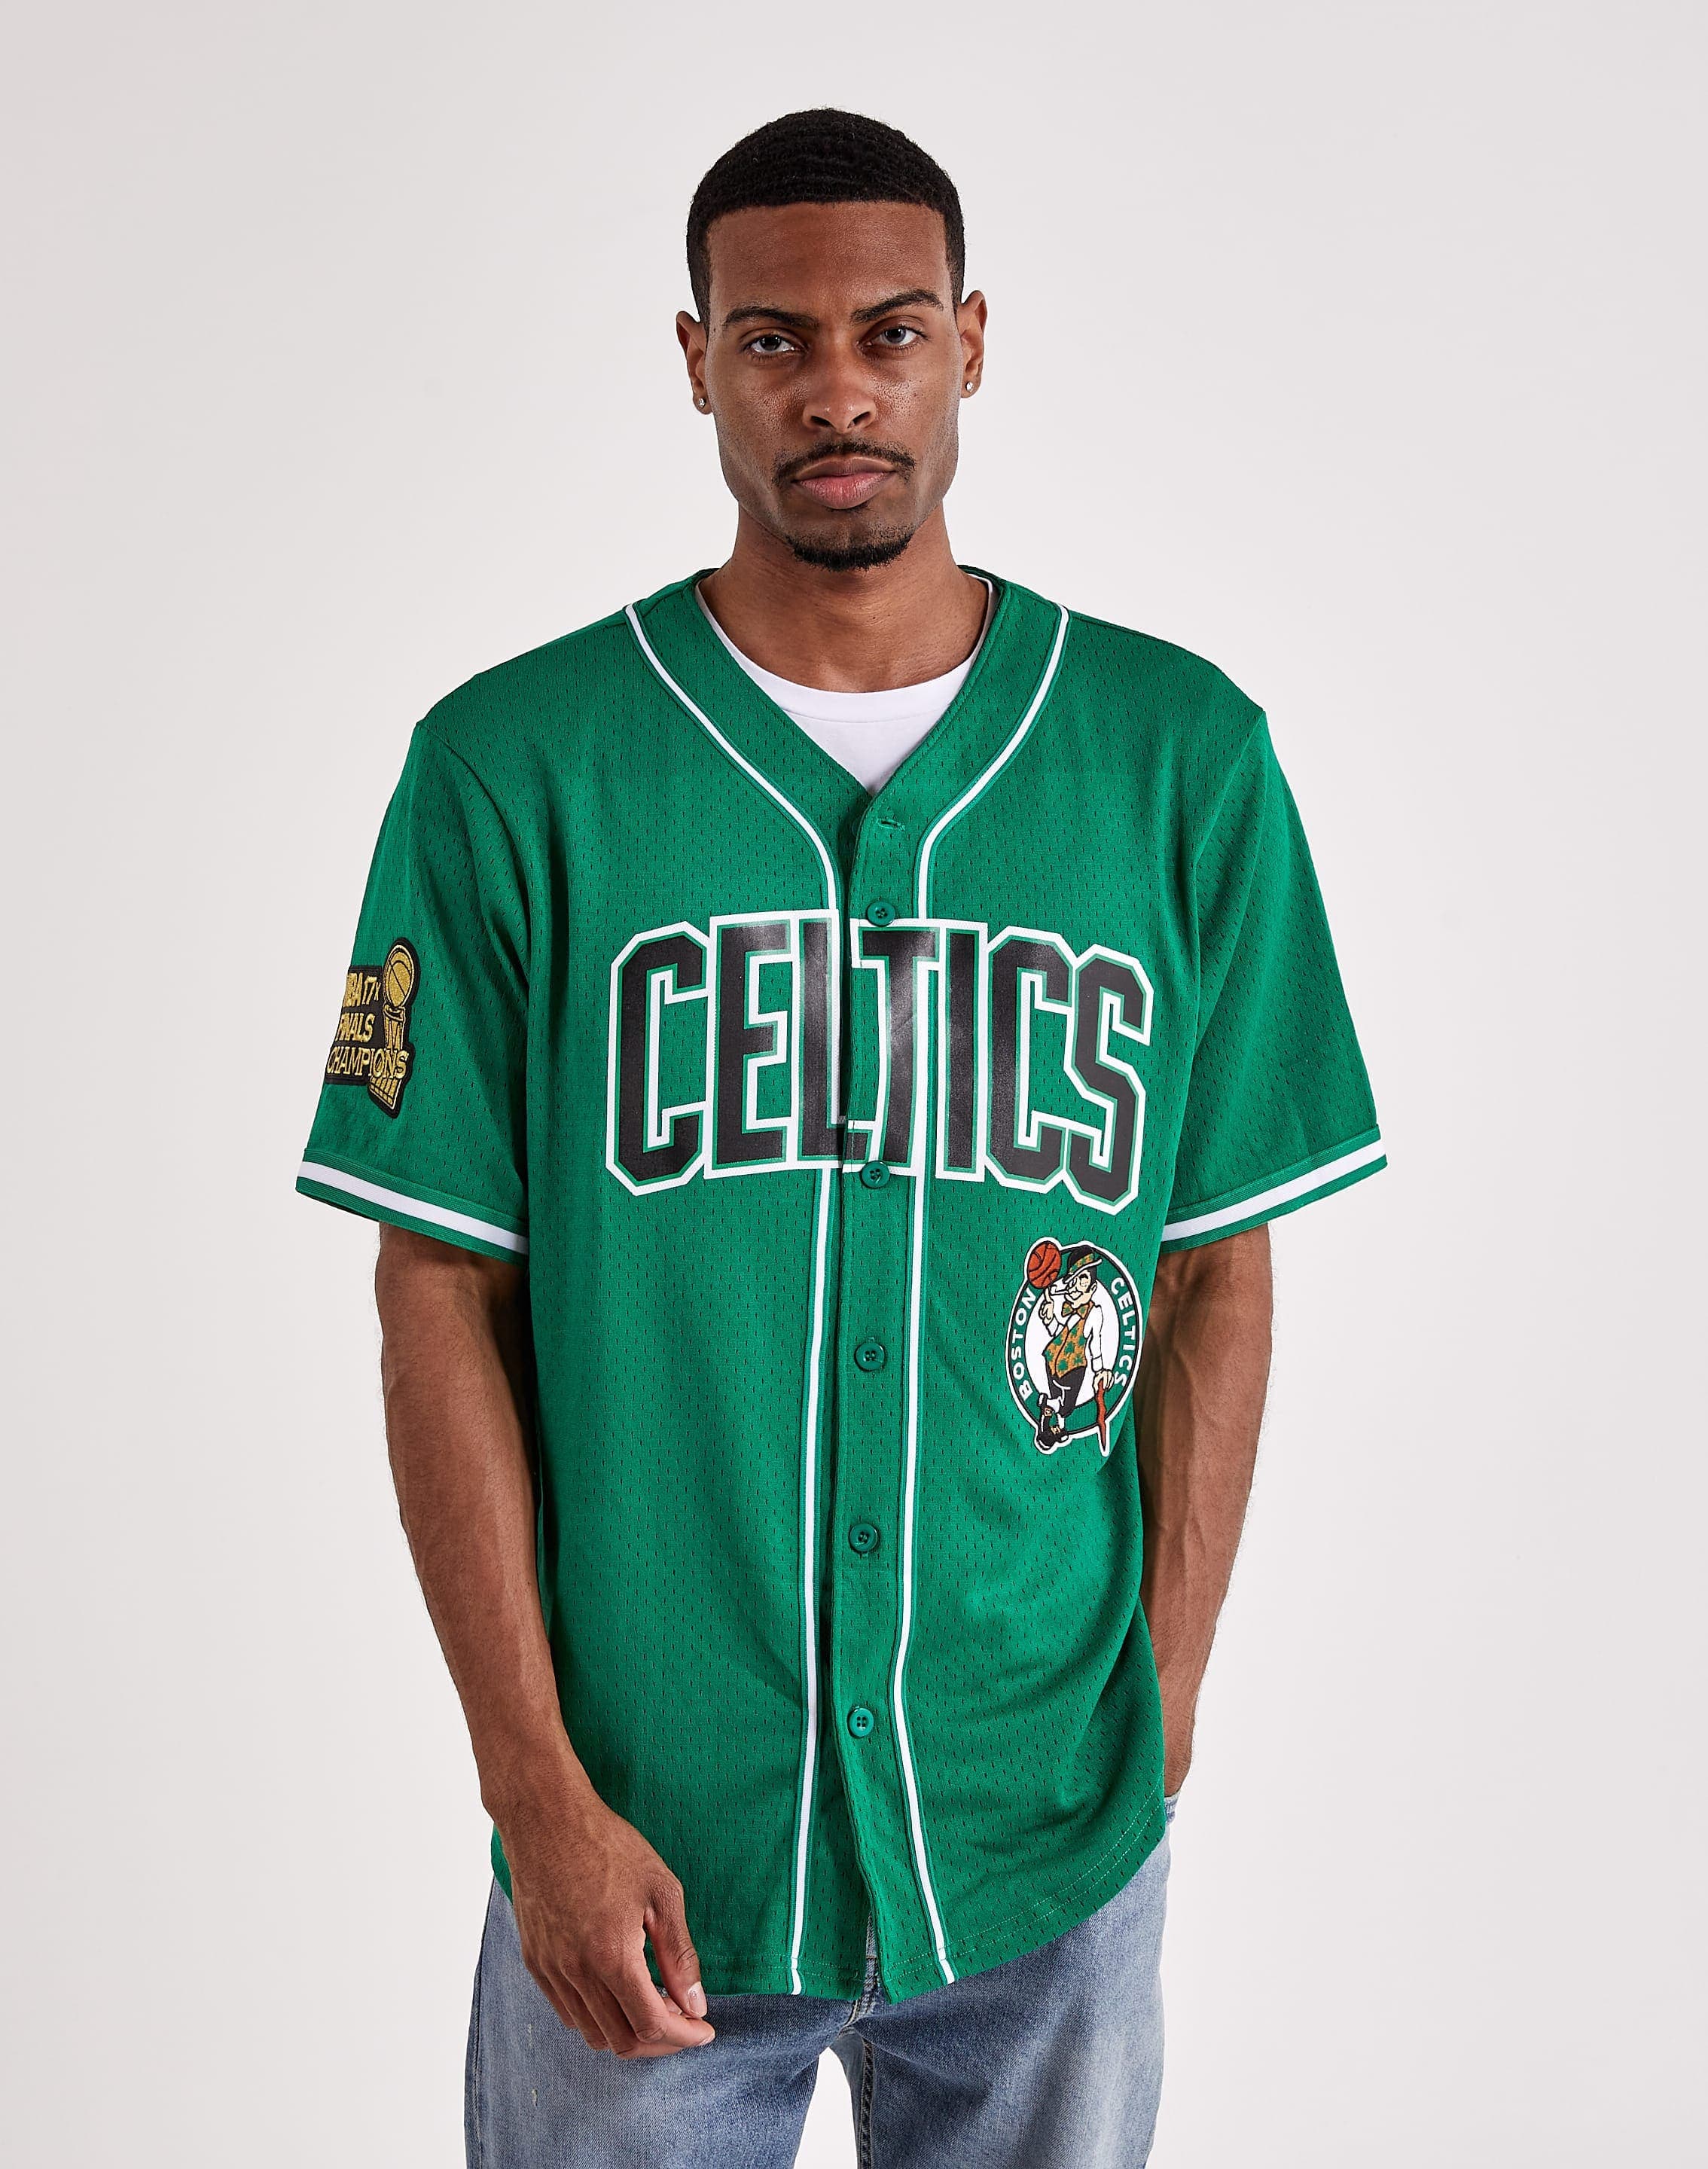 Boston Celtics Team Shop